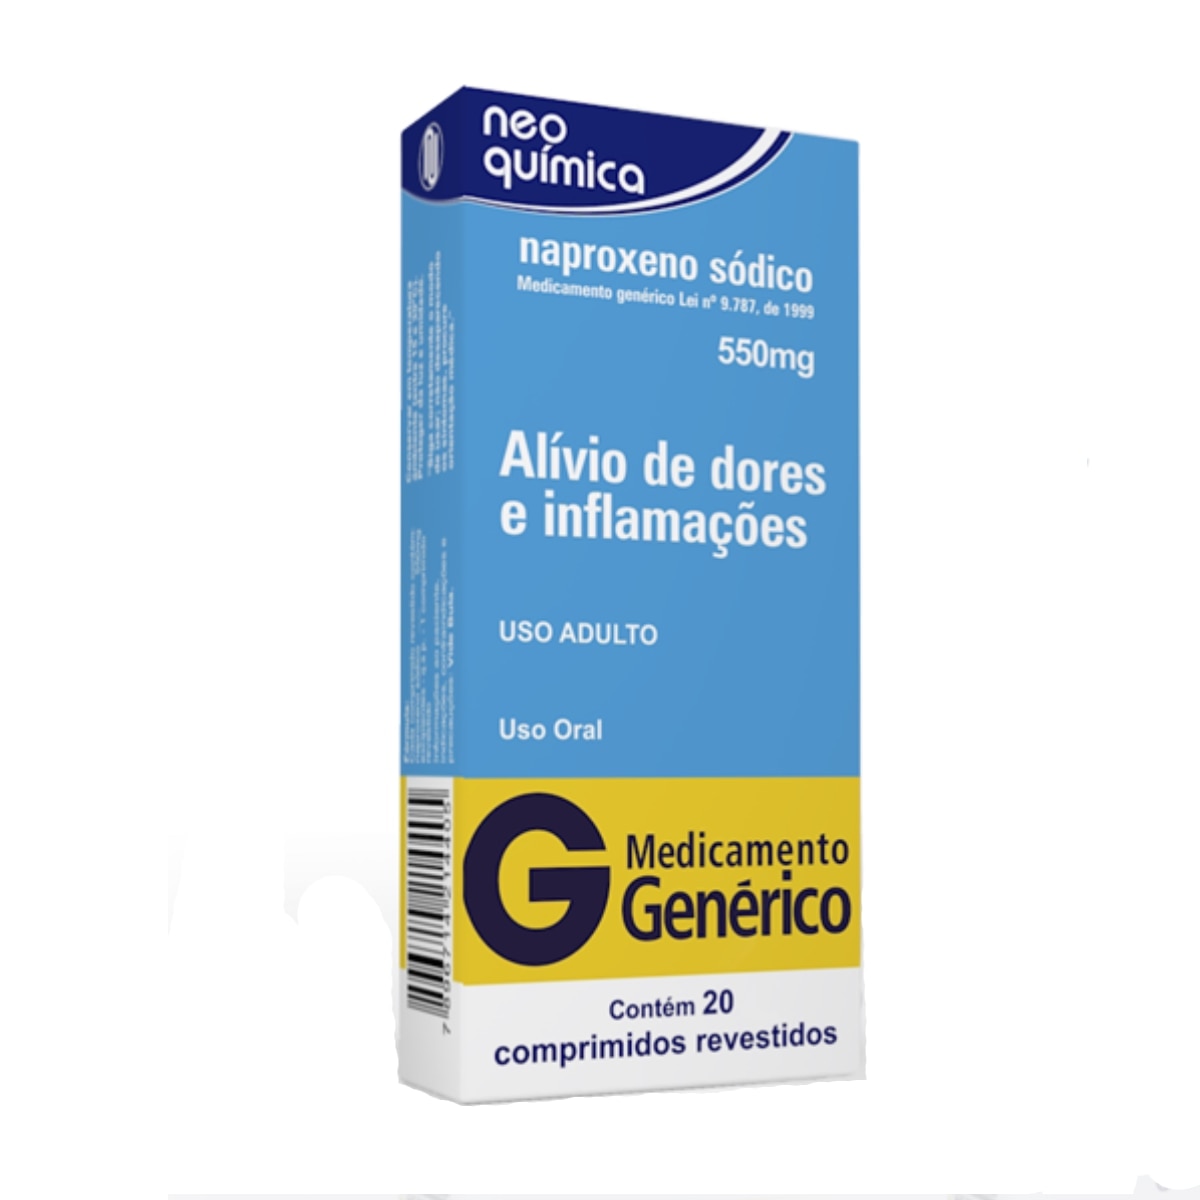 Naproxeno Sodico 550mg 20 Comprimidos Revestidos Neo Quimica Generico